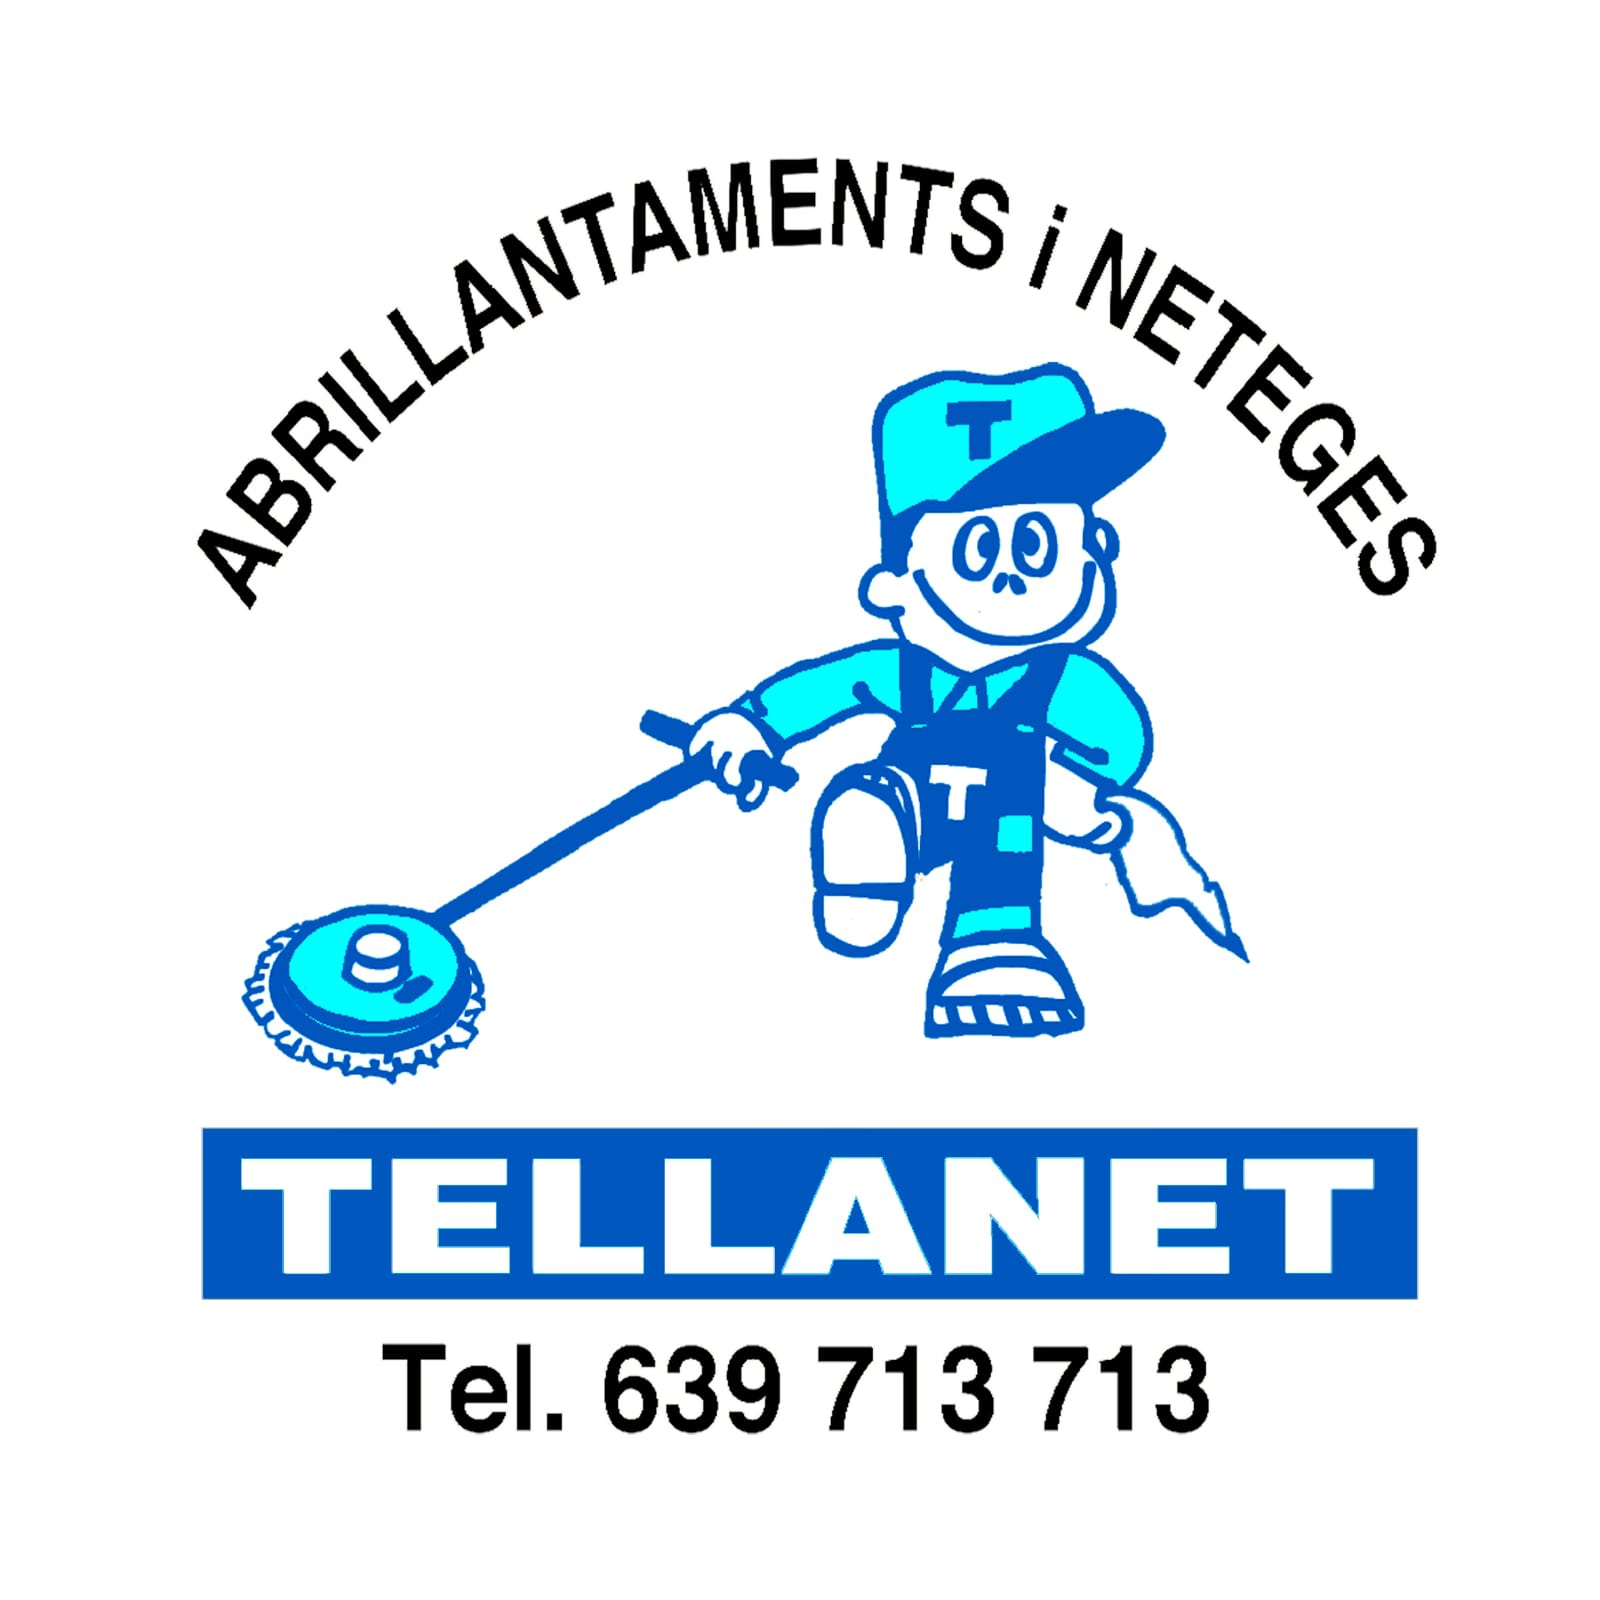 TellaNet